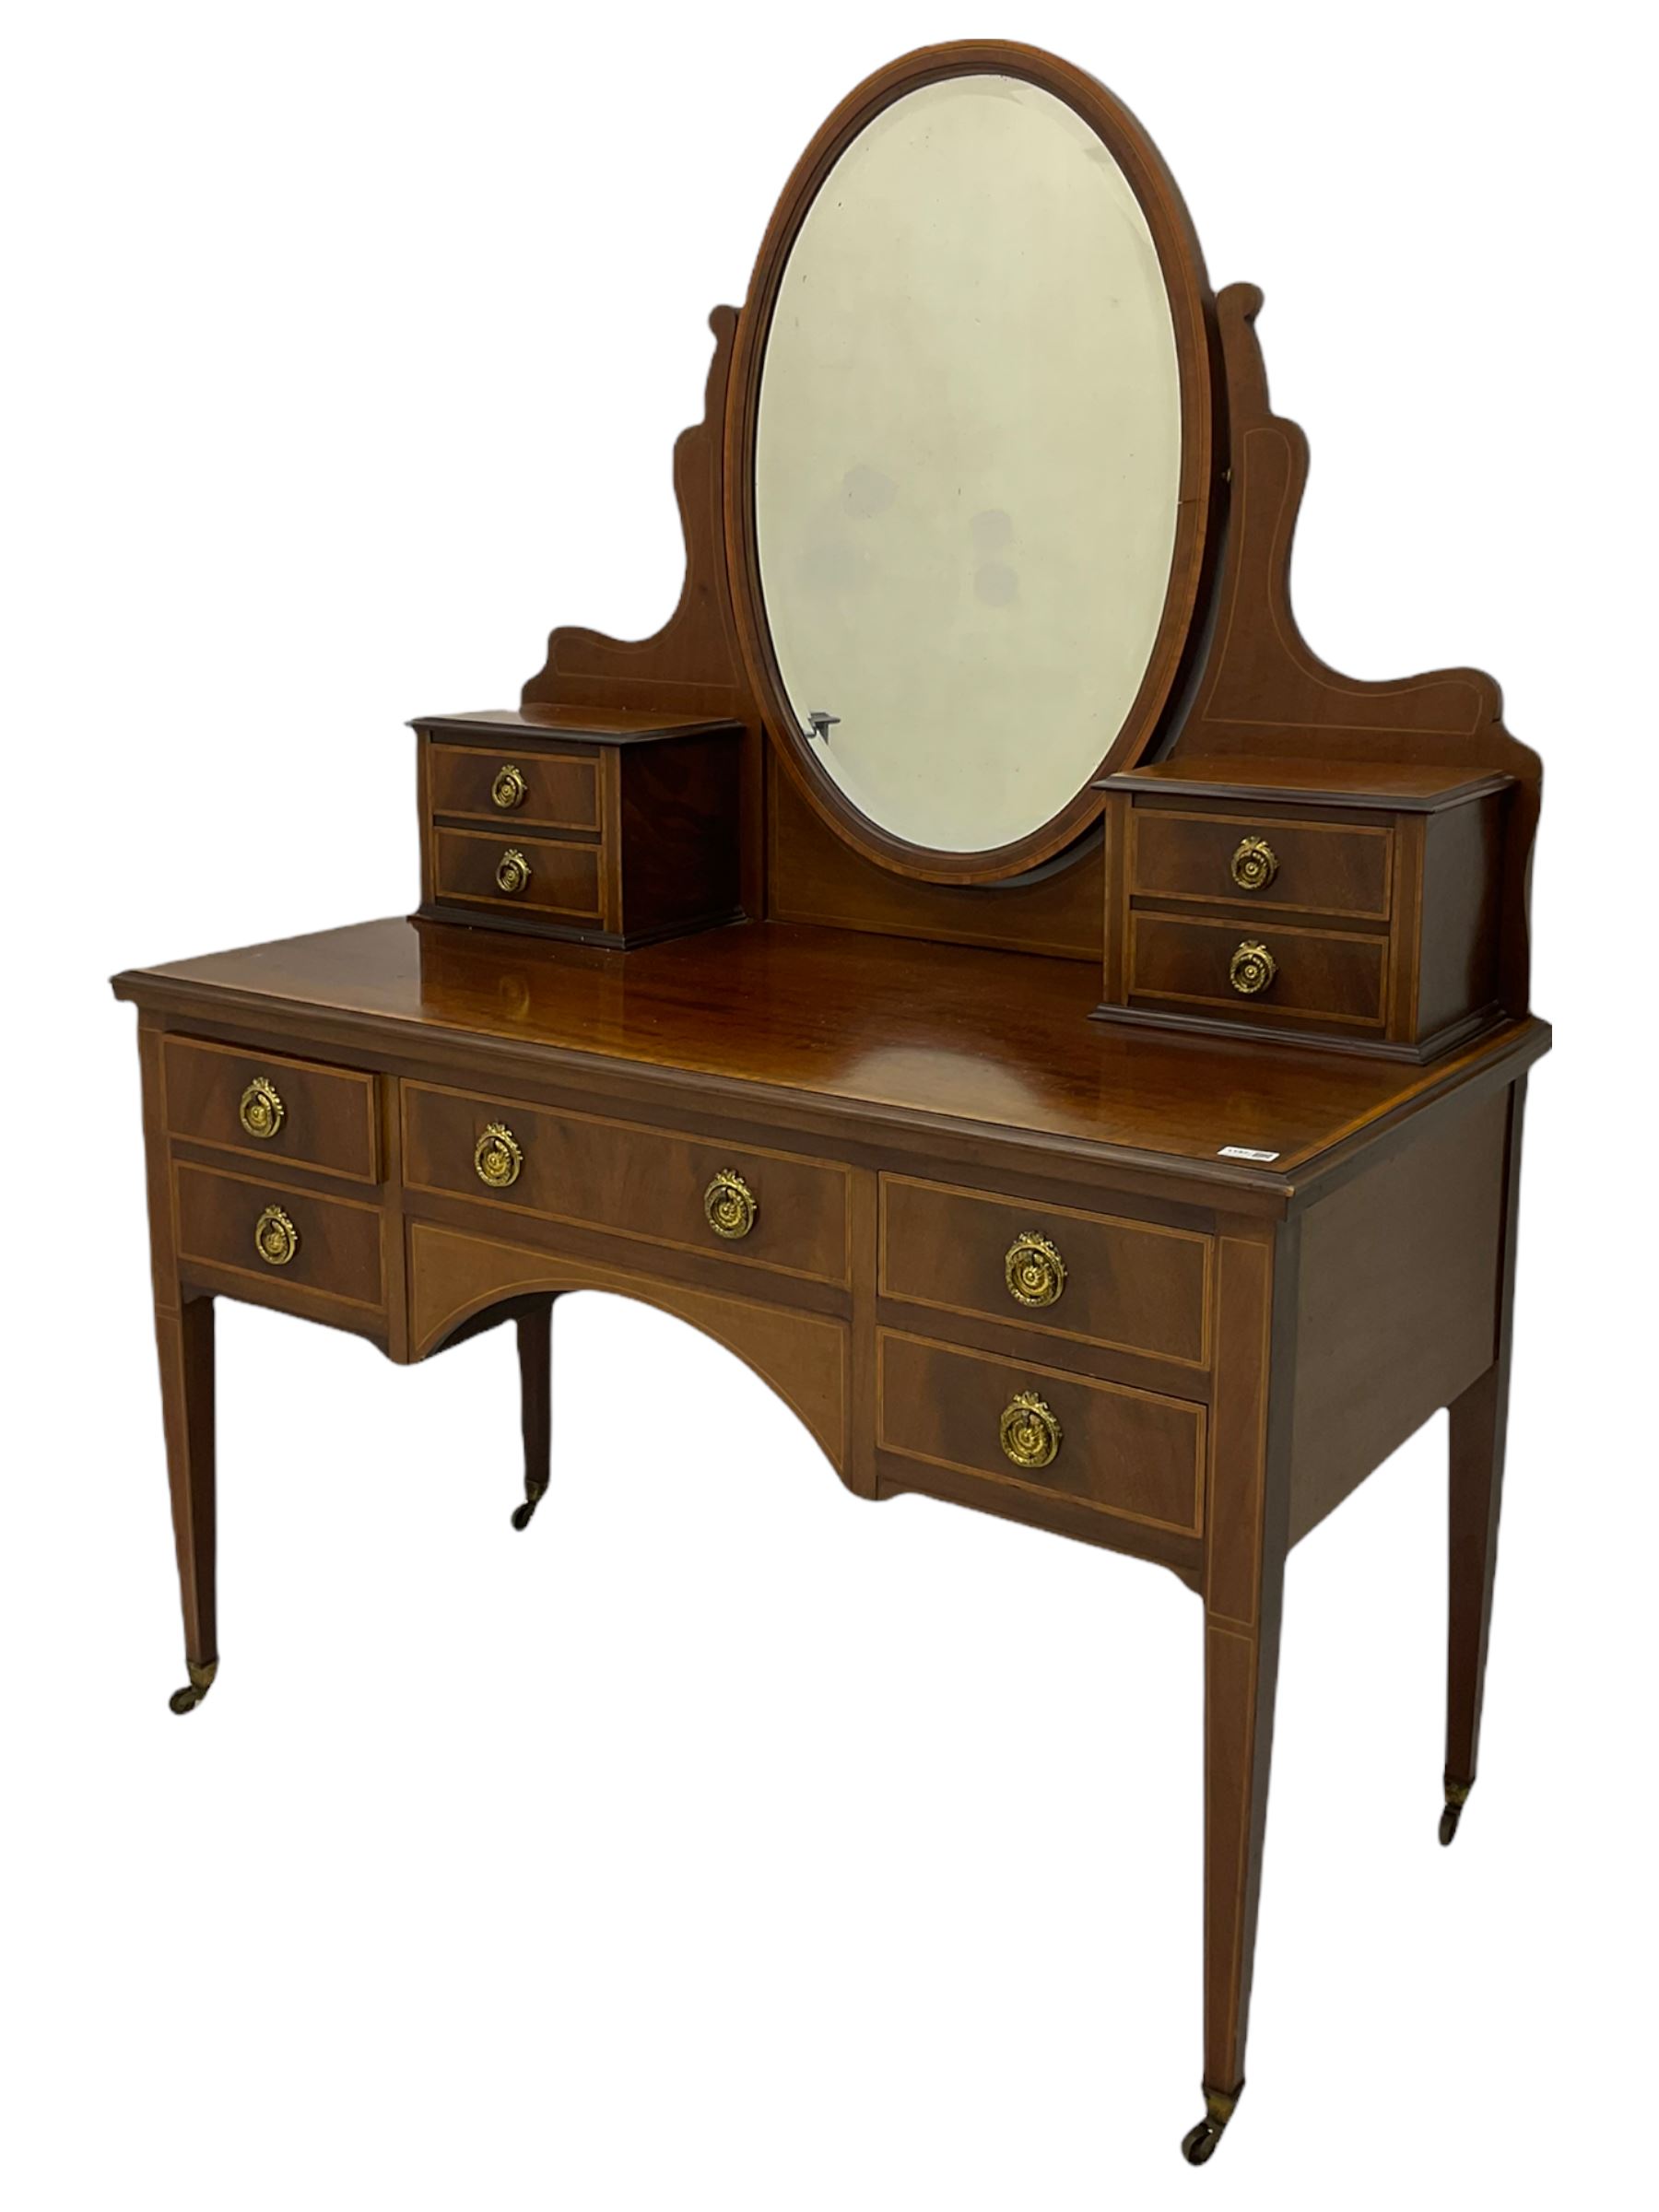 James Shoolbred & Co. London - Edwardian inlaid mahogany dressing table - Image 2 of 6